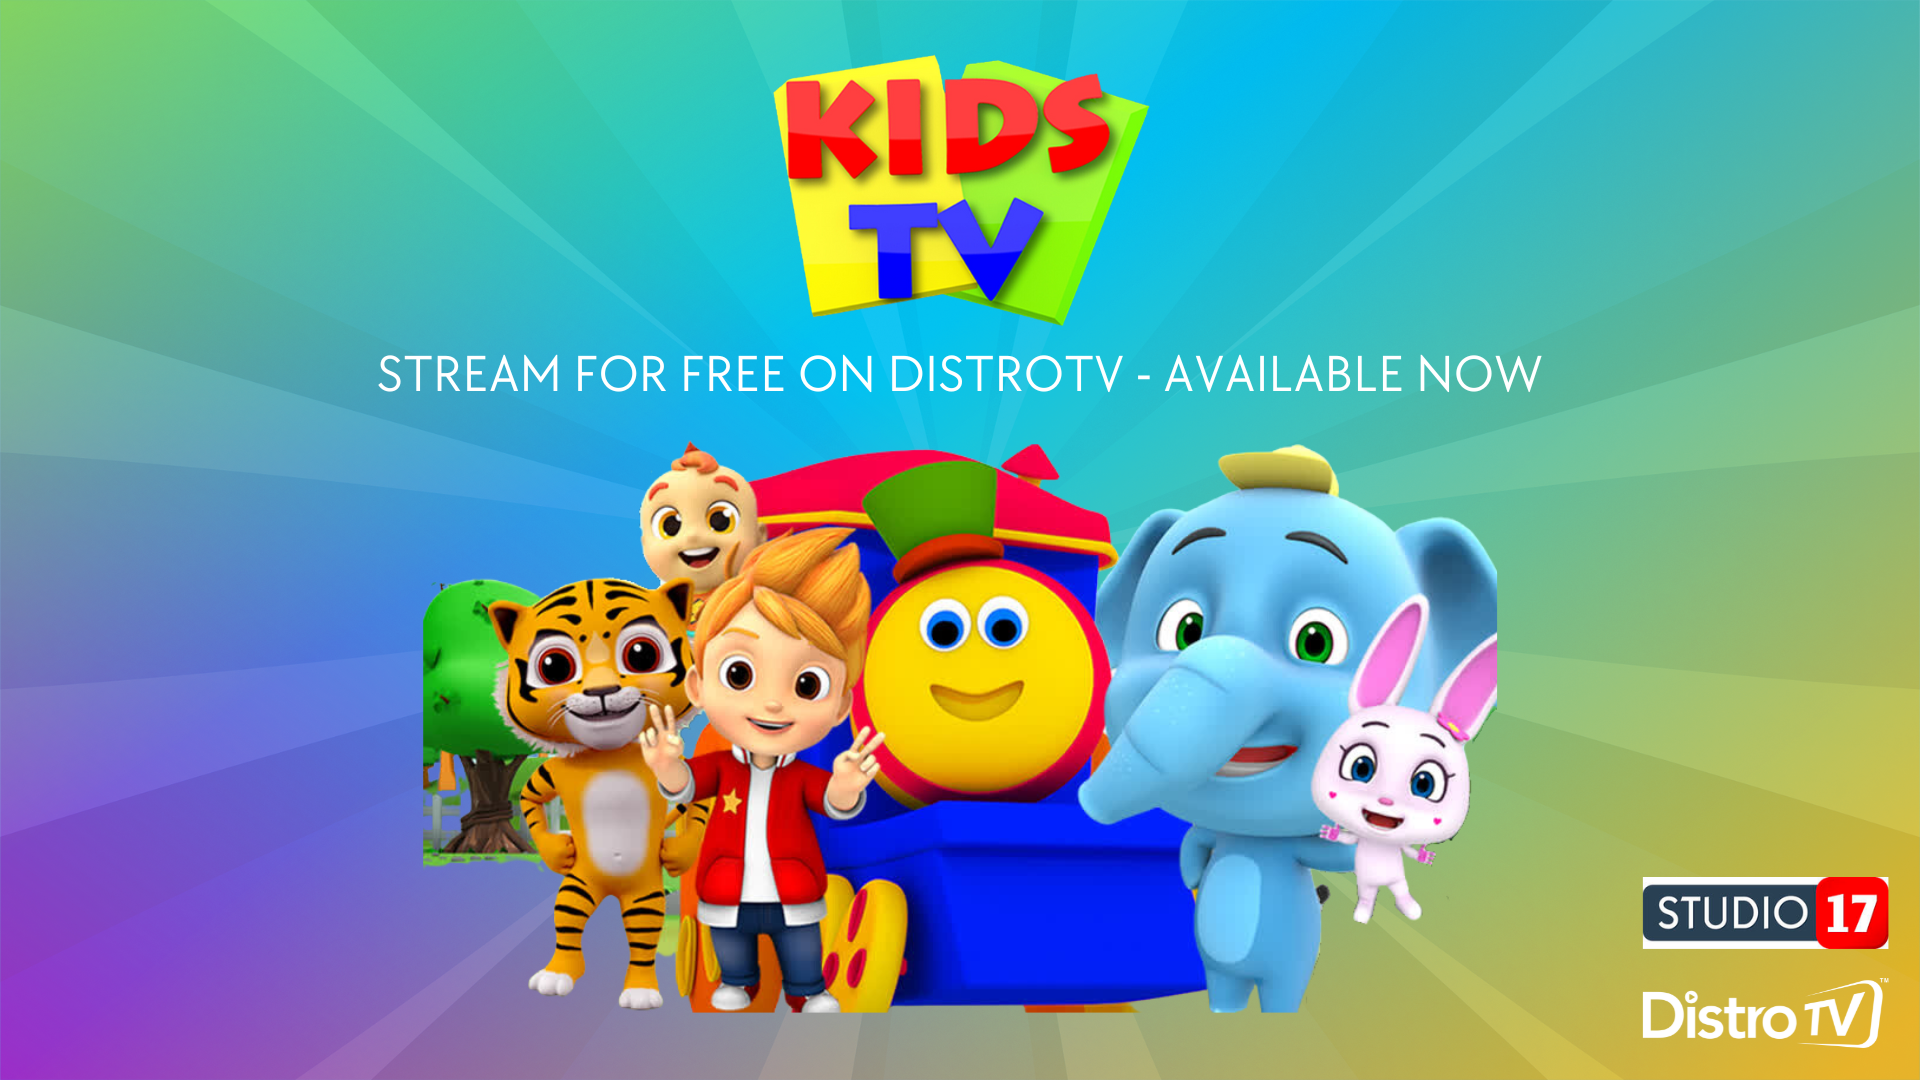 Kids TV Content Like Bob the Train Will Stream For Free Through DistroTV